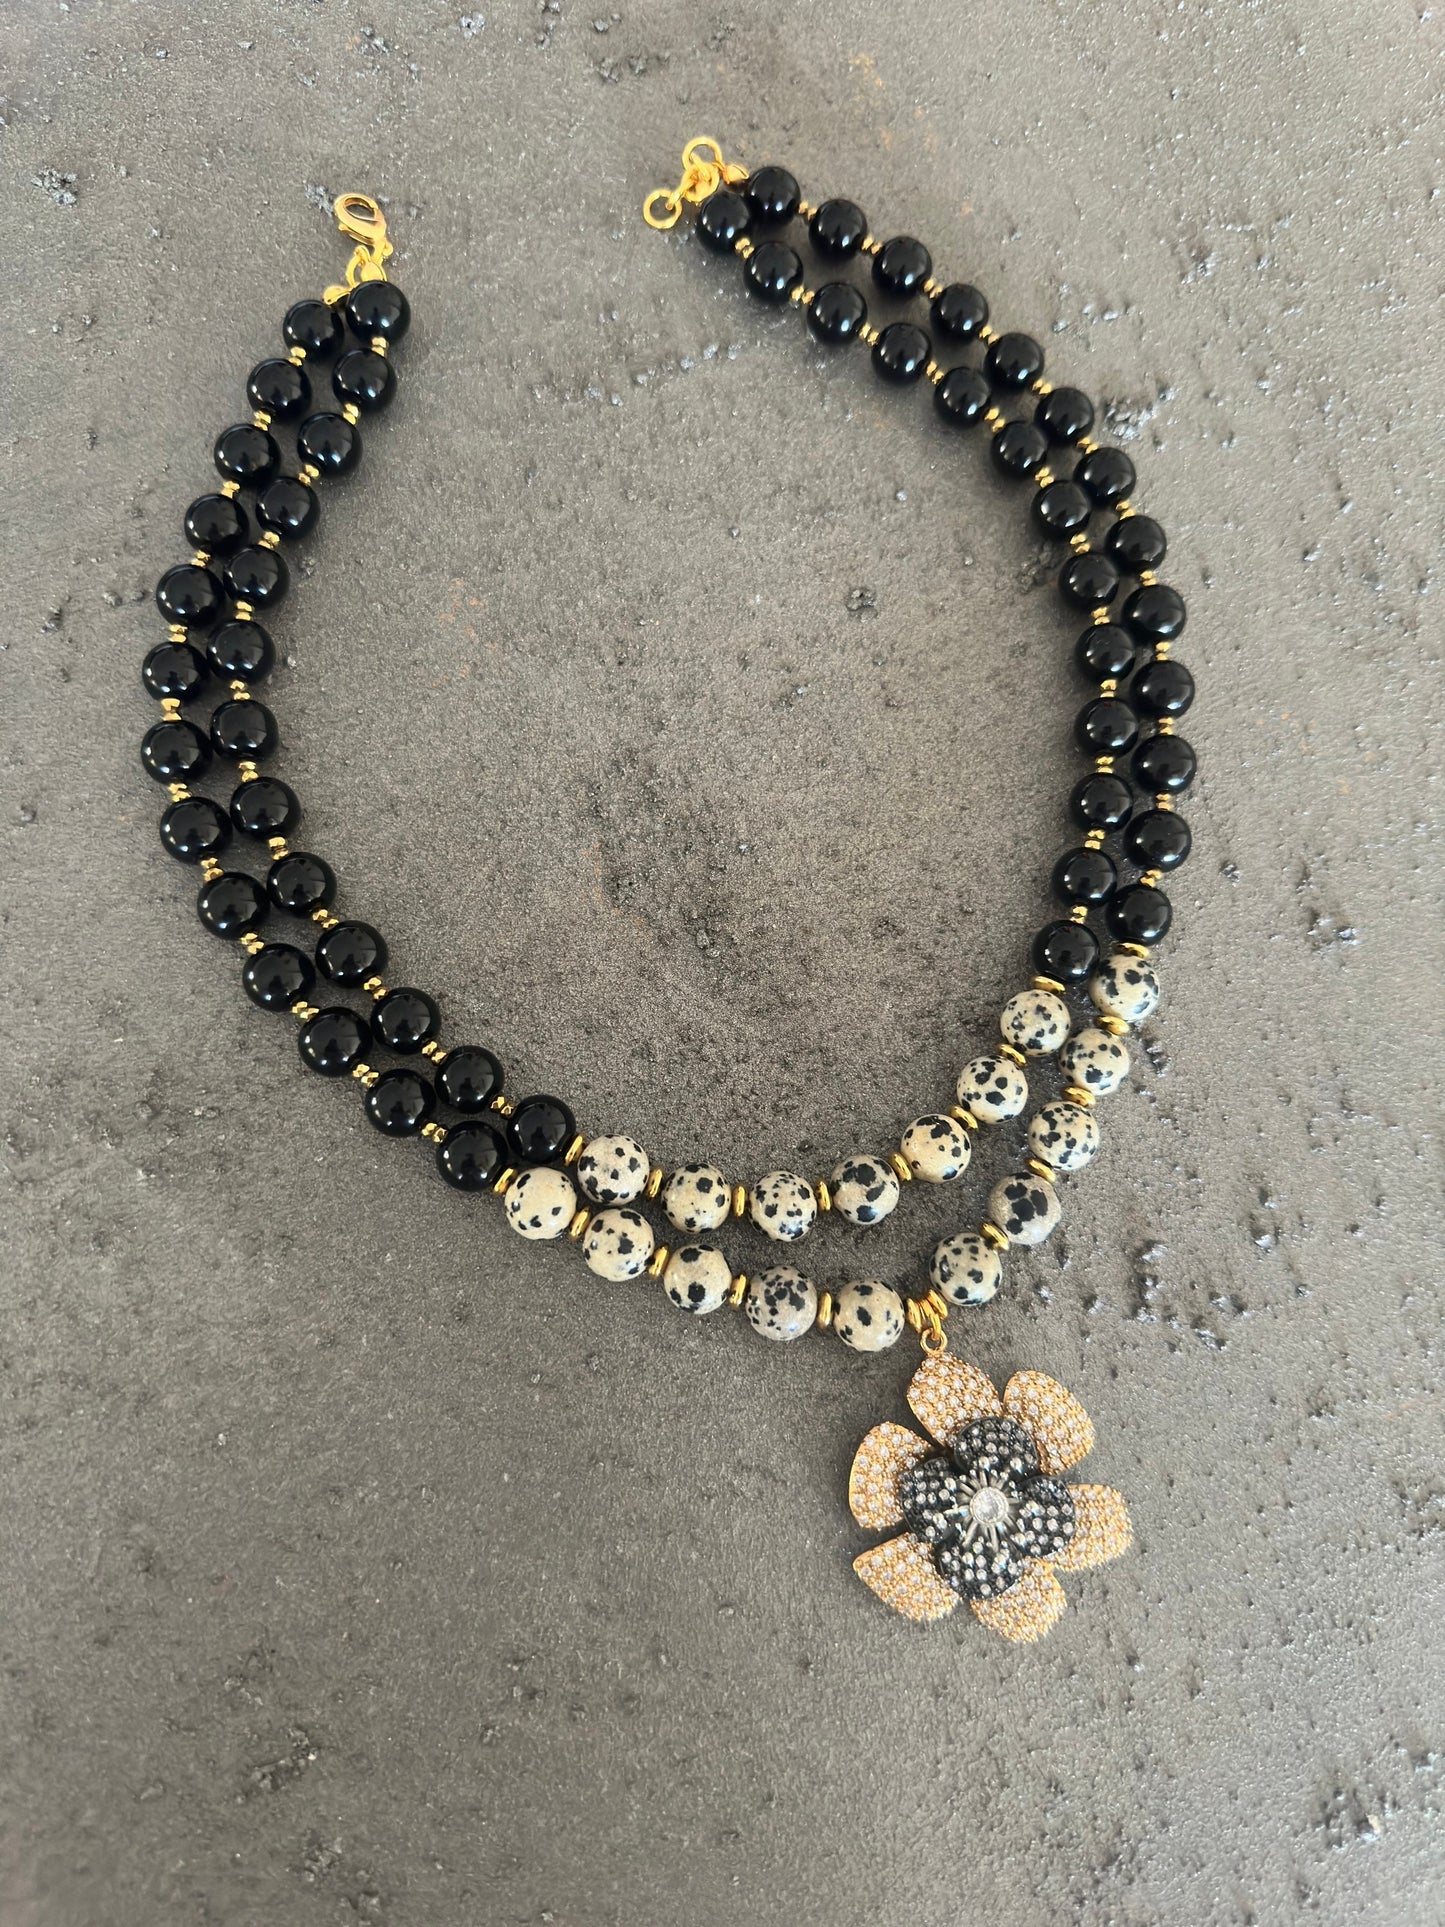 Gemstone Necklace, Jasper and Onyx Multi-strand Jewelry, Big Flower Necklace for Birthday Gifts, Handmade Statement Necklace